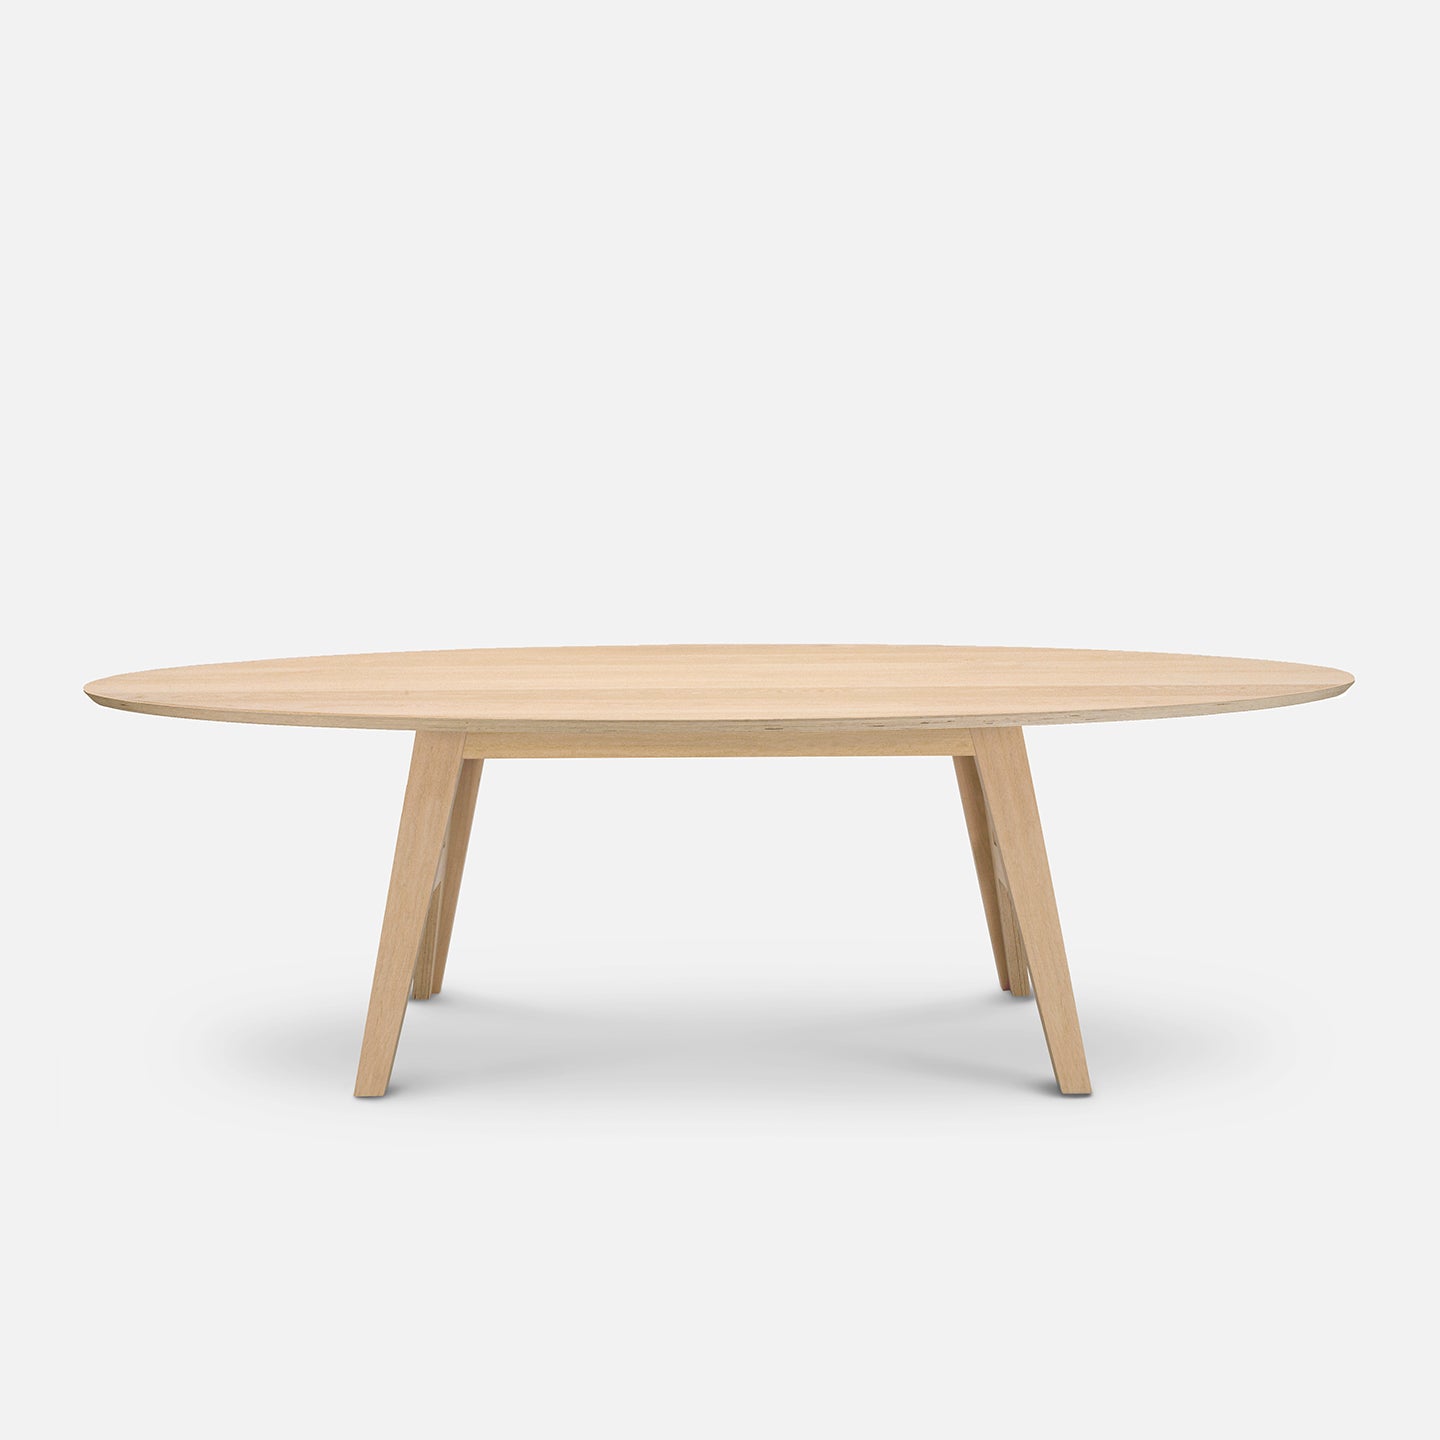 wazig voorspelling Decoratief Ovale design tafel A-legs CC | Arp design